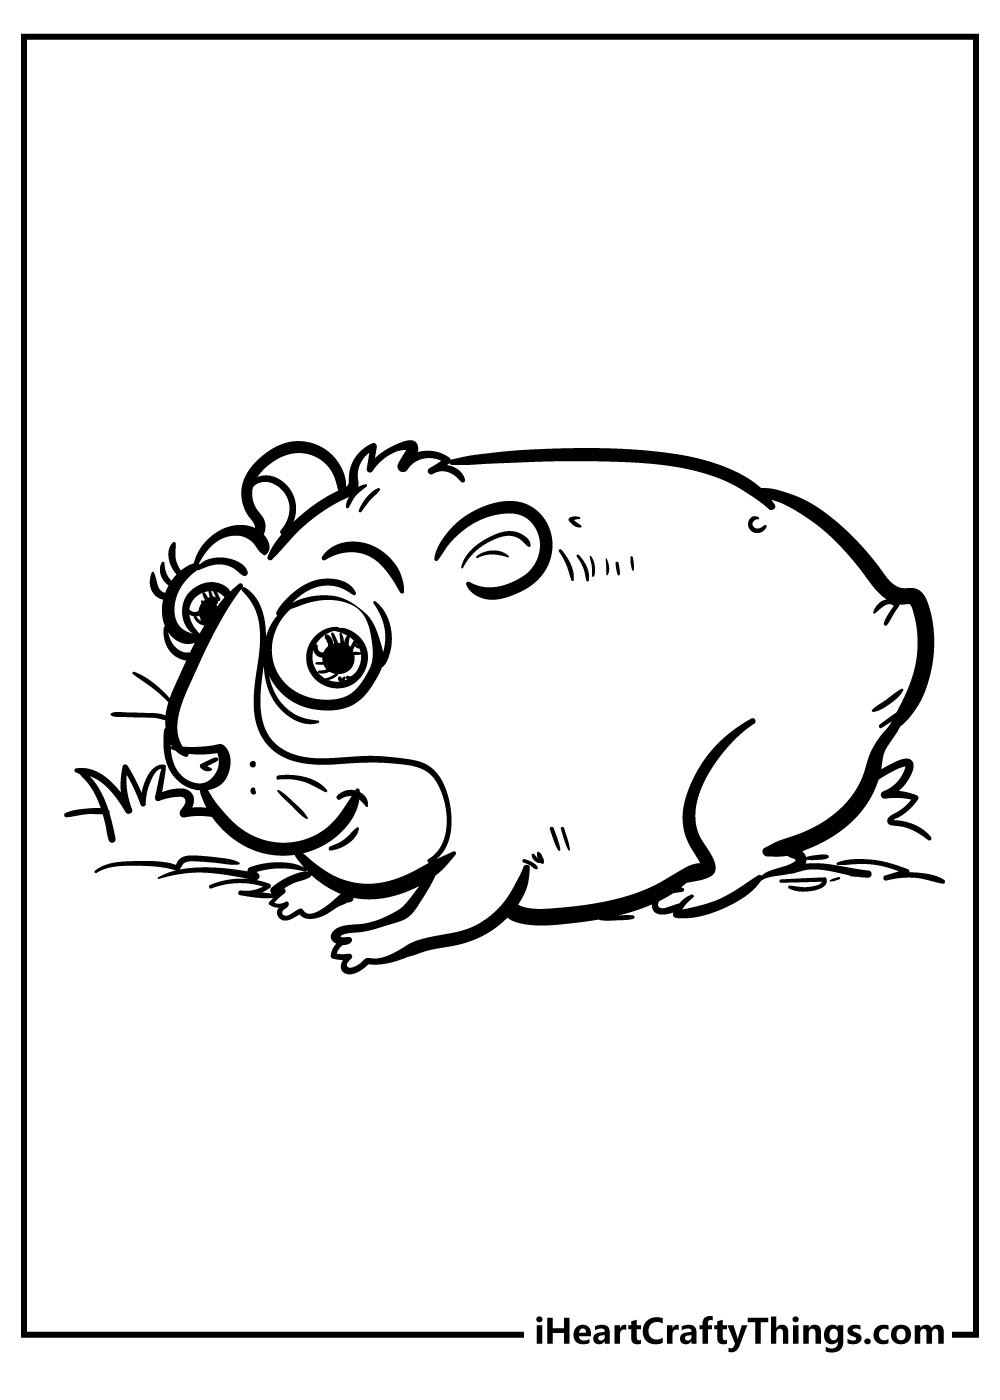 Hamster Coloring Sheet for children free download